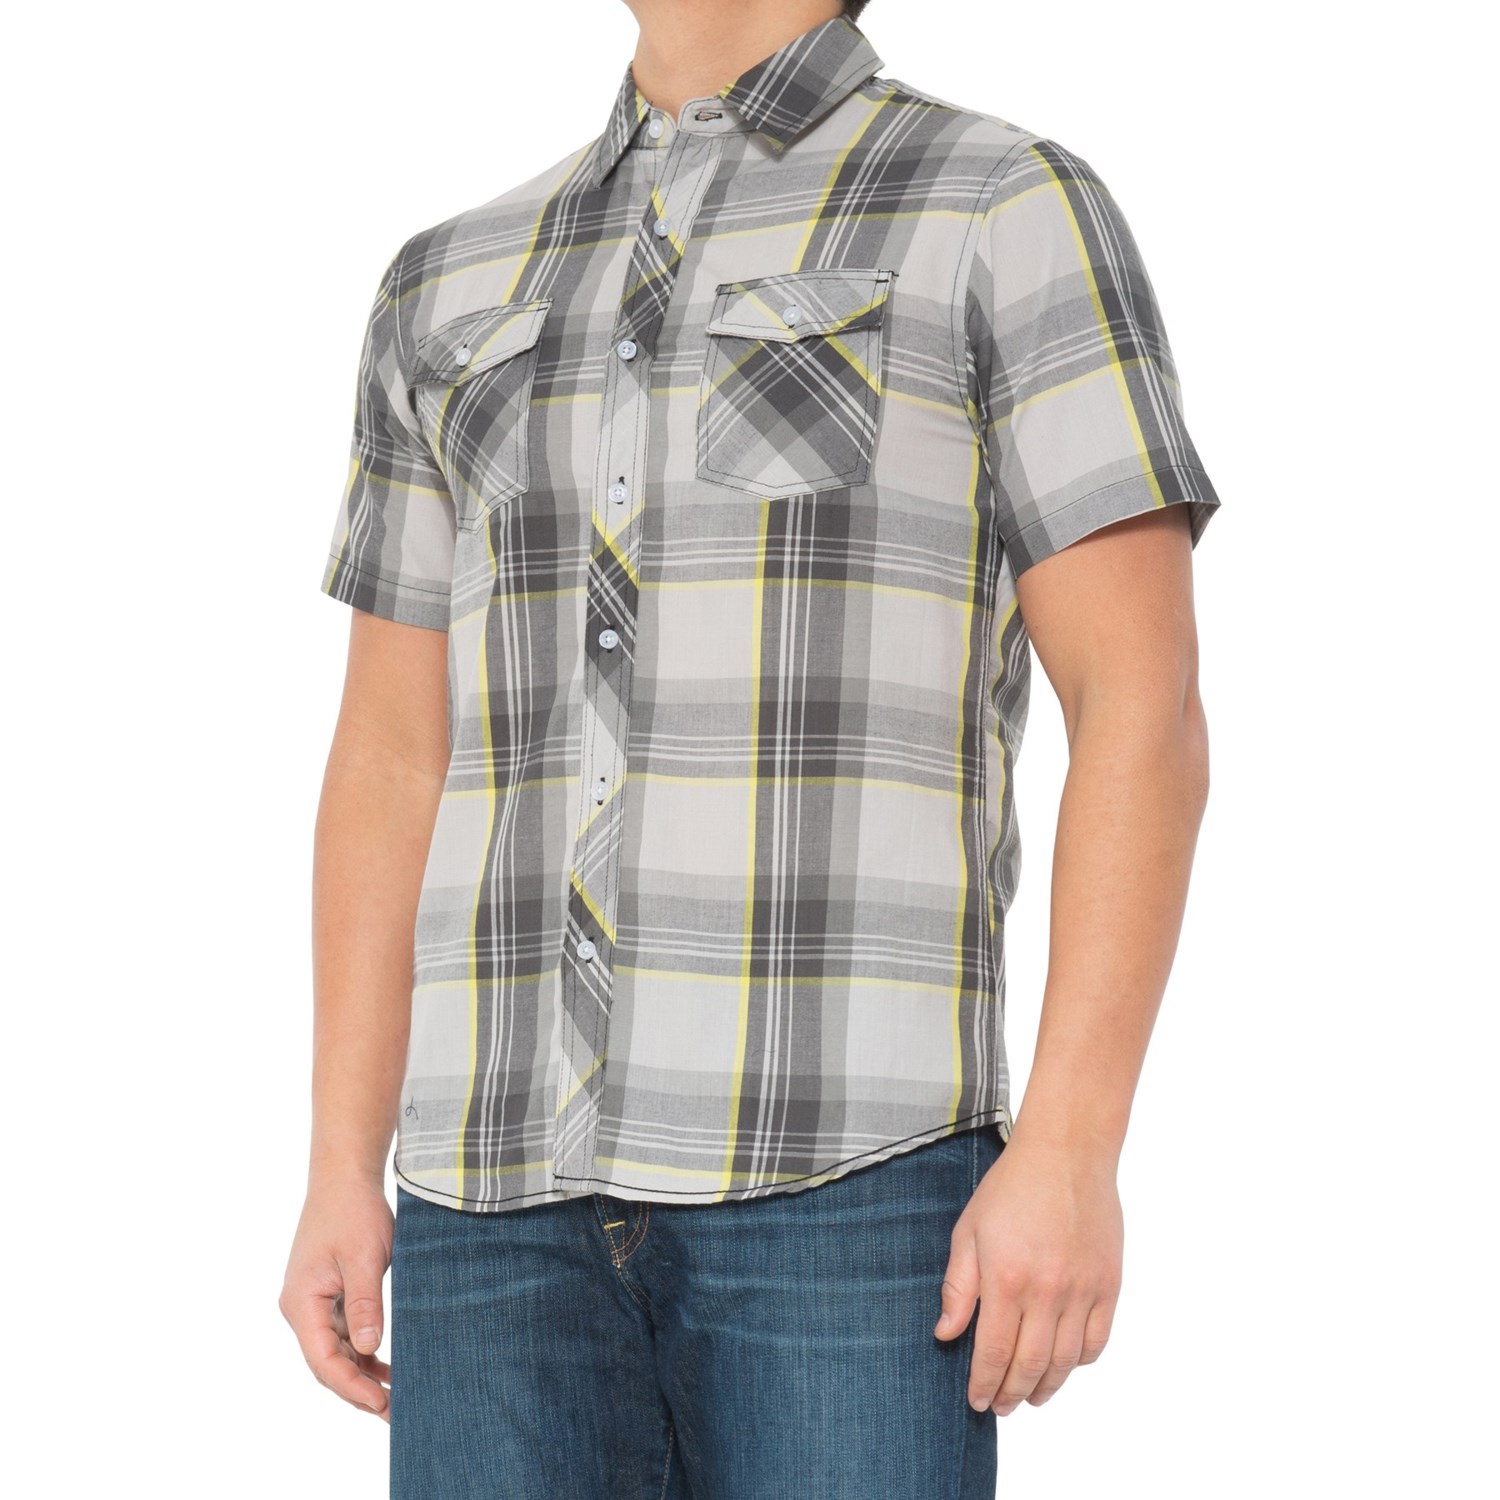 SIERRA PACIFIC Plaid Woven Shirt (For Men) - Save 72%